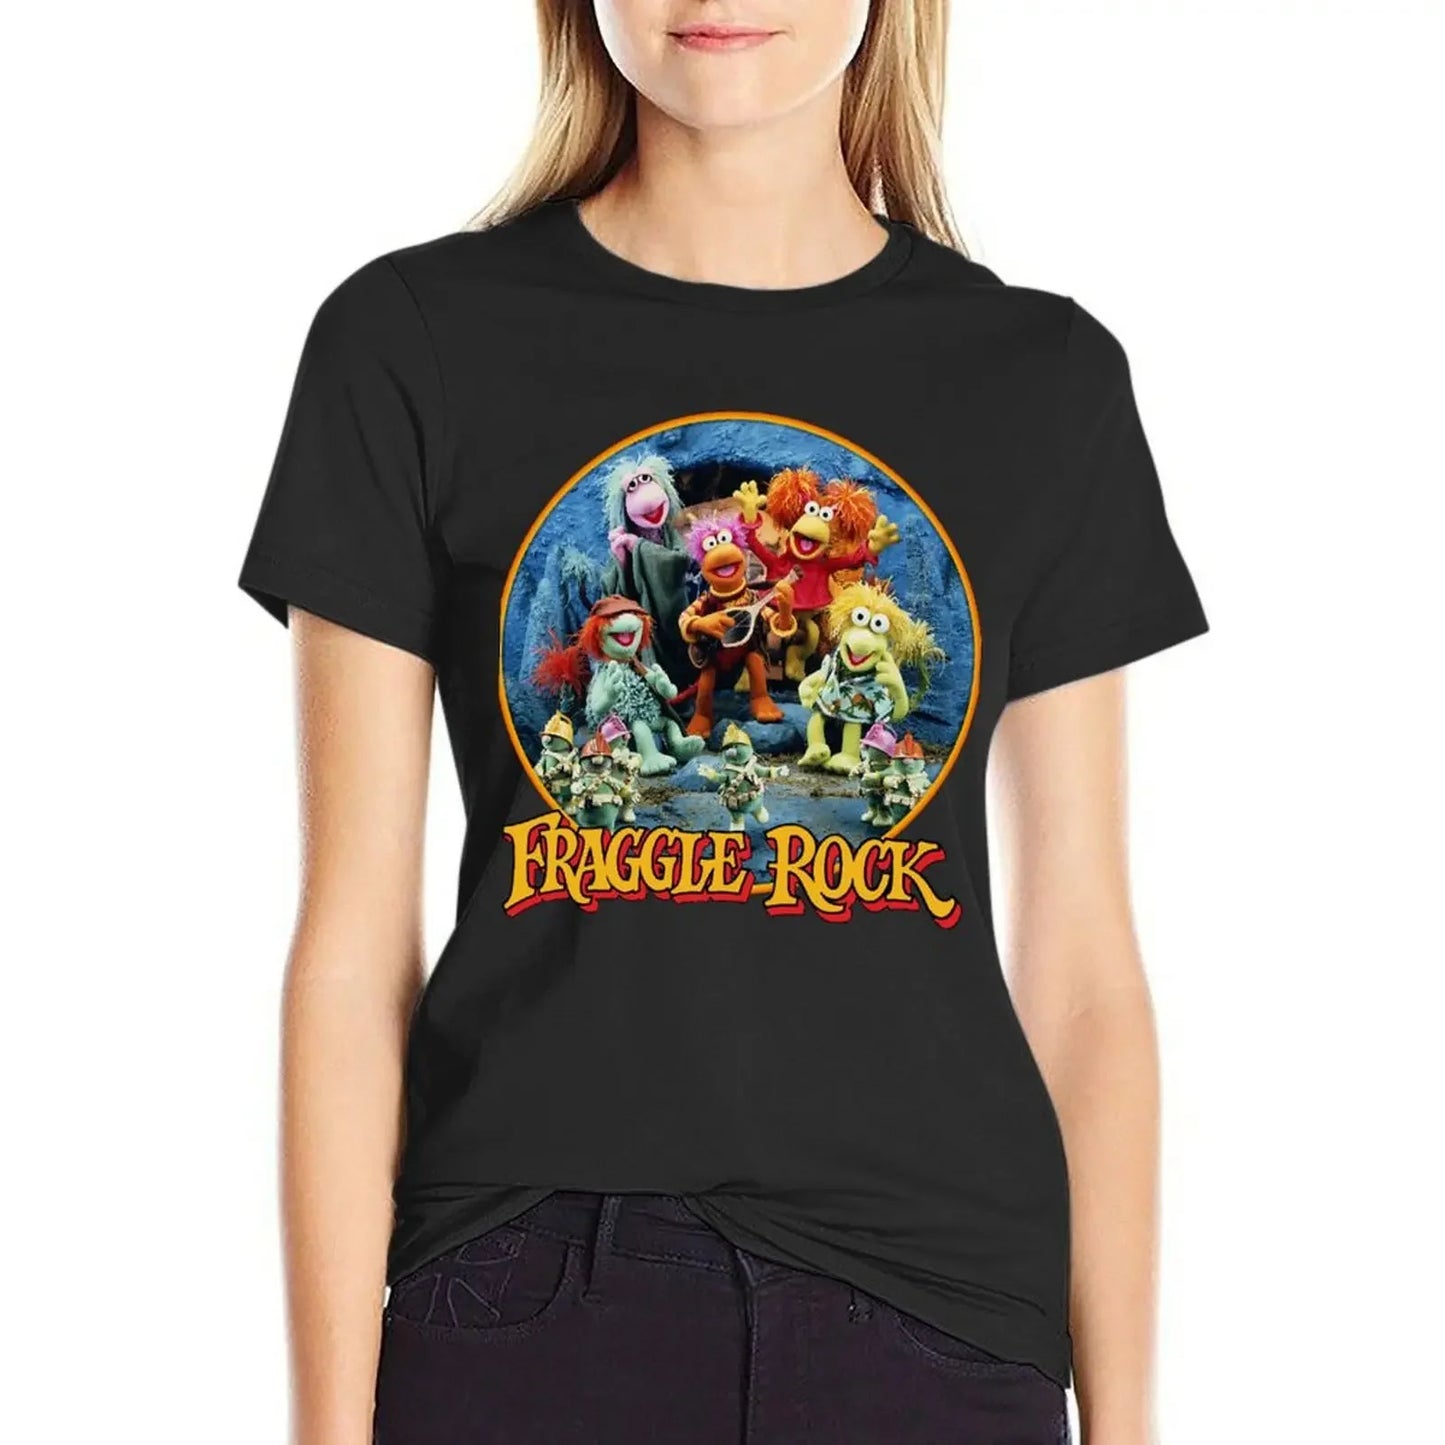 Fraggle Rock Muppets TV Show T-Shirt Gifts For Music Fans Music Vintage Retro Female Clothing Tops Short Sleeve Tee Women's Shirt - Lizard Vigilante